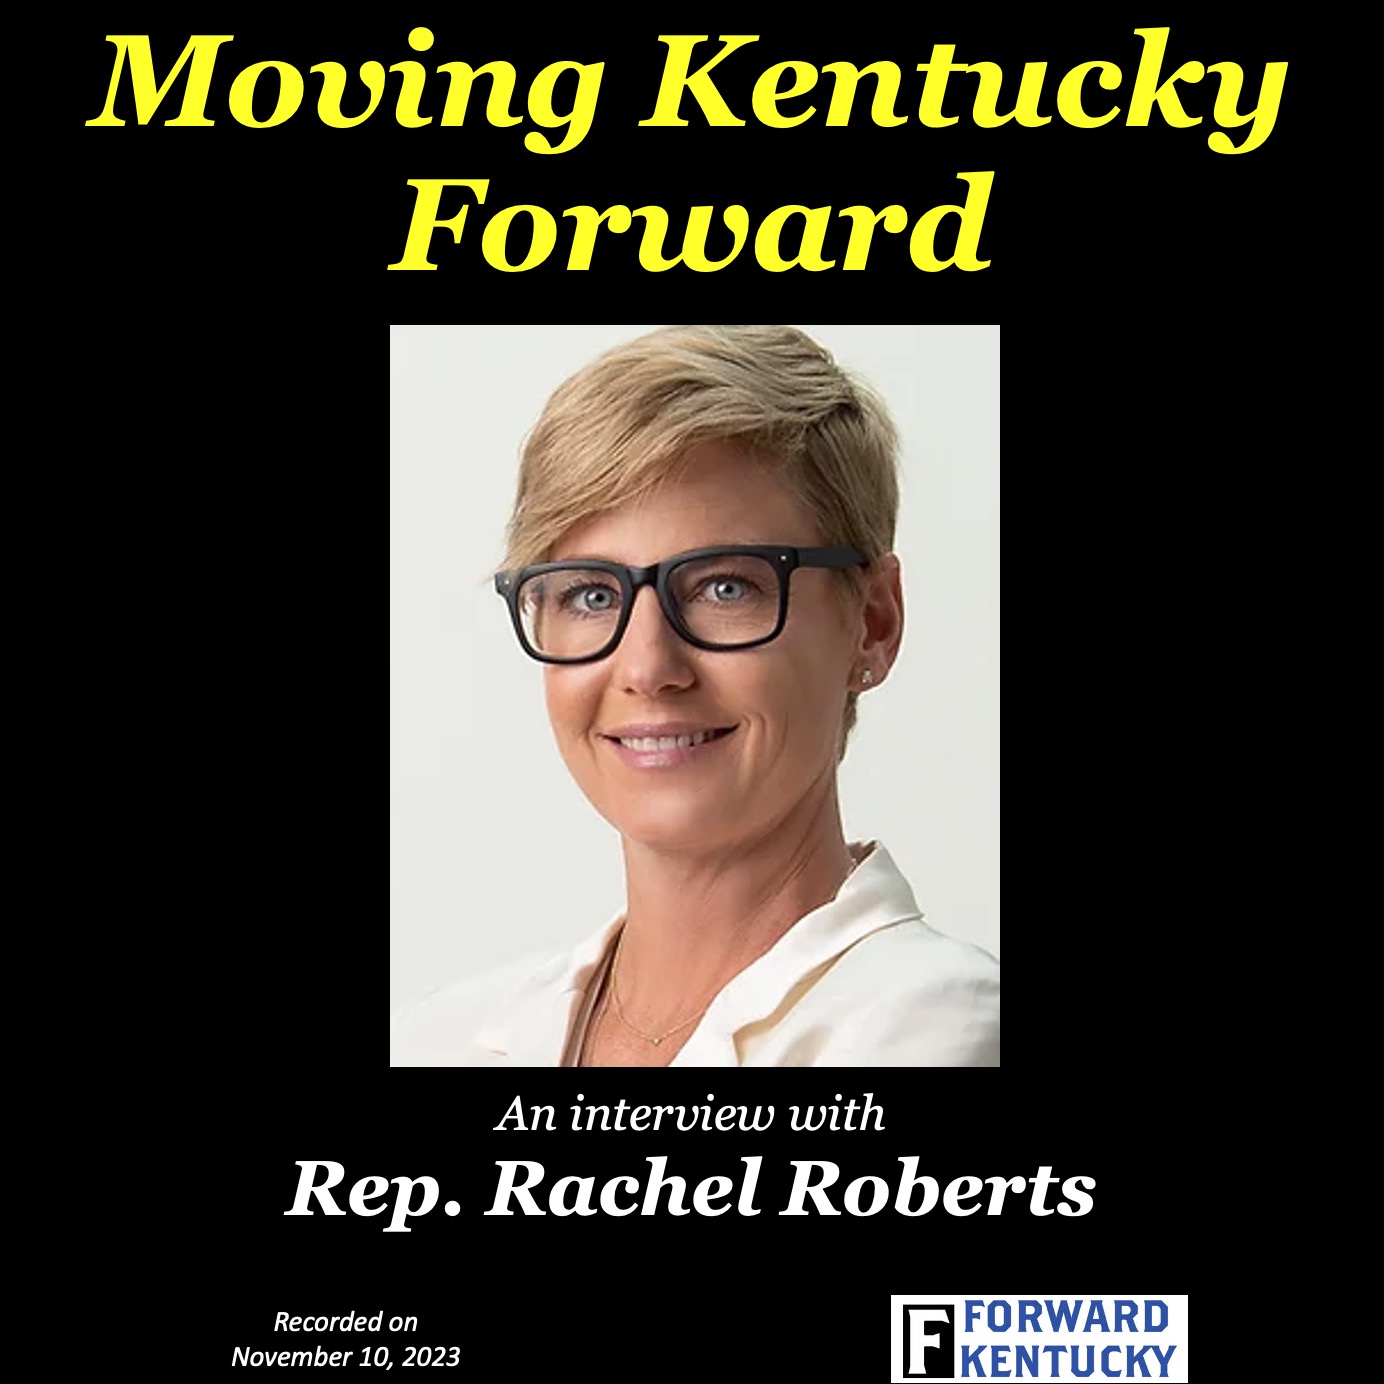 An interview with Rep. Rachel Roberts